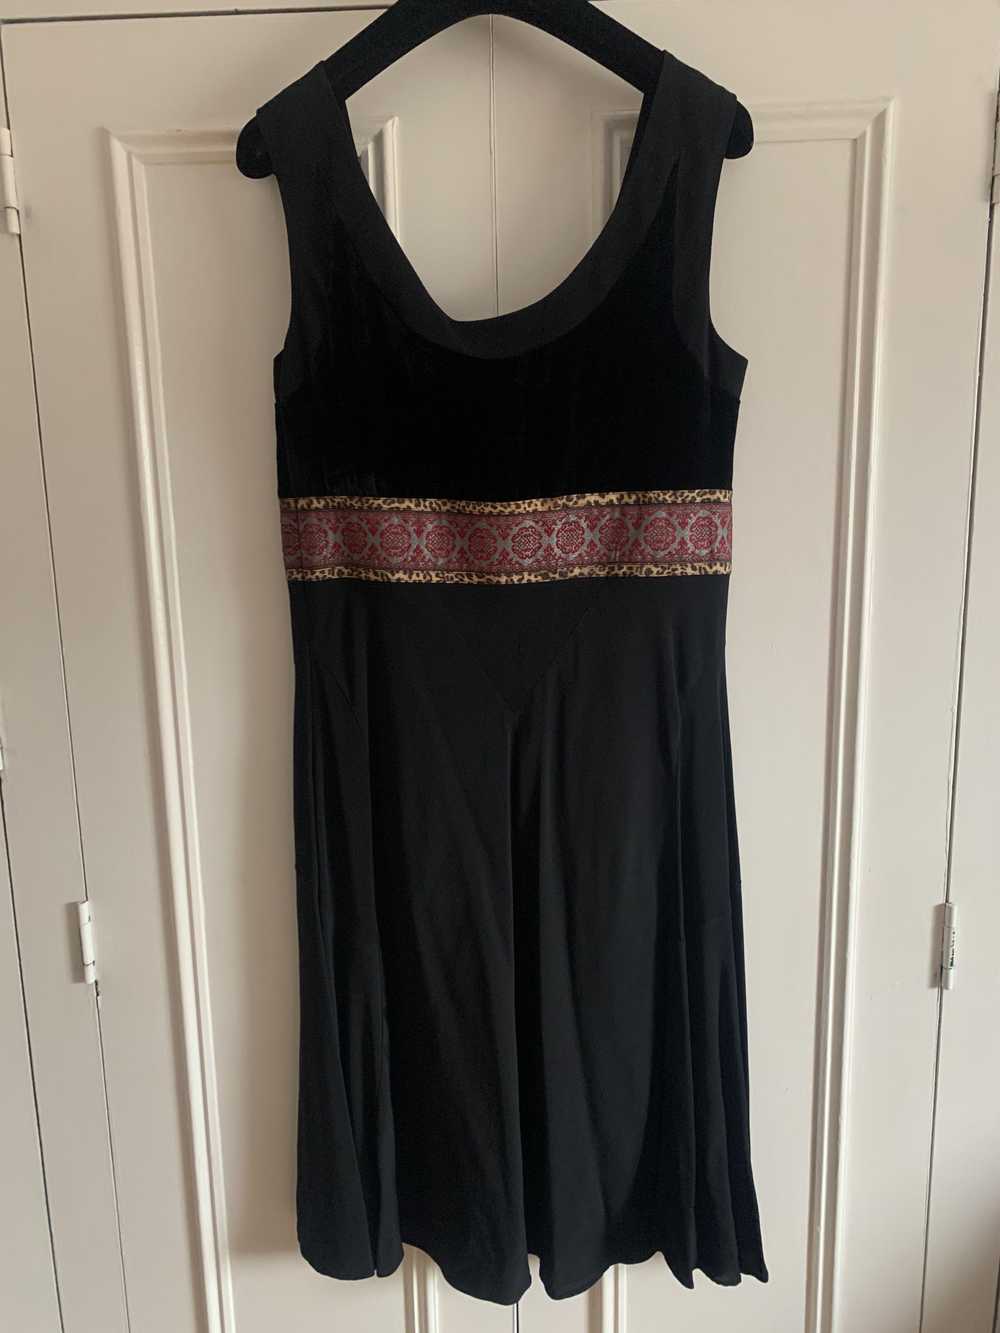 Galliano Galliano Black Satin Embroidered Dress - image 5